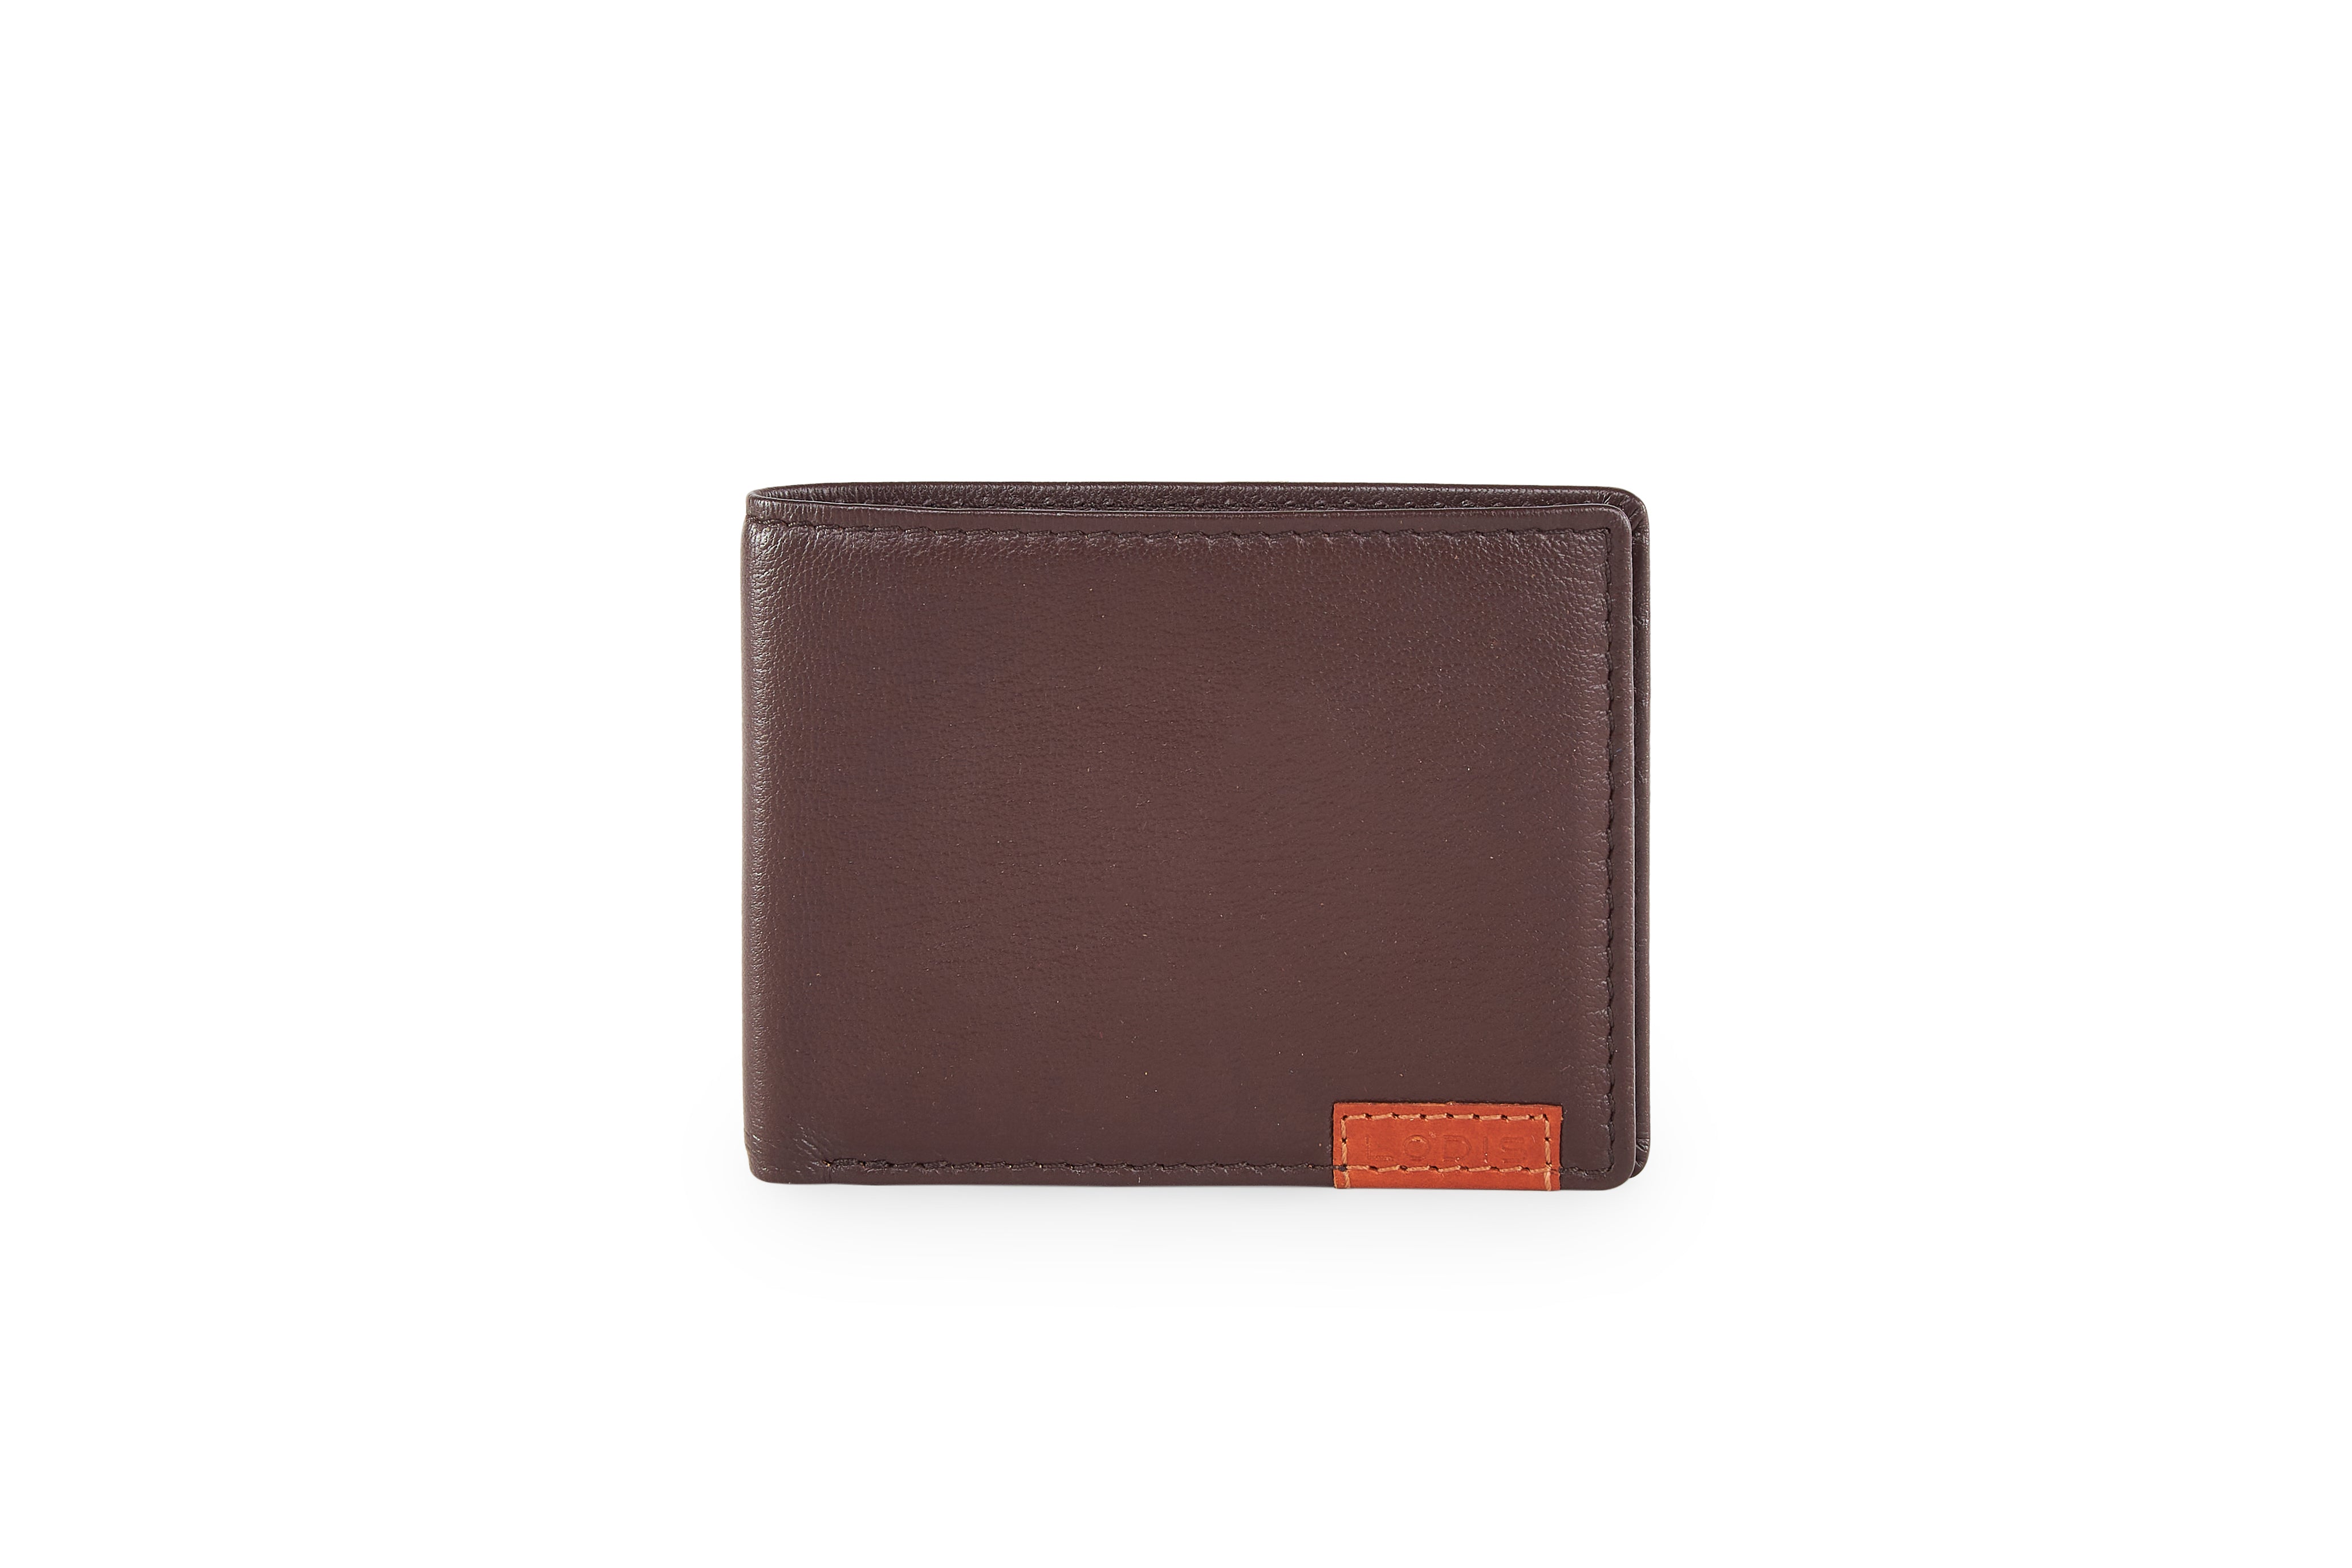 Buy Levi's Mens Leather Zipper Wallet online